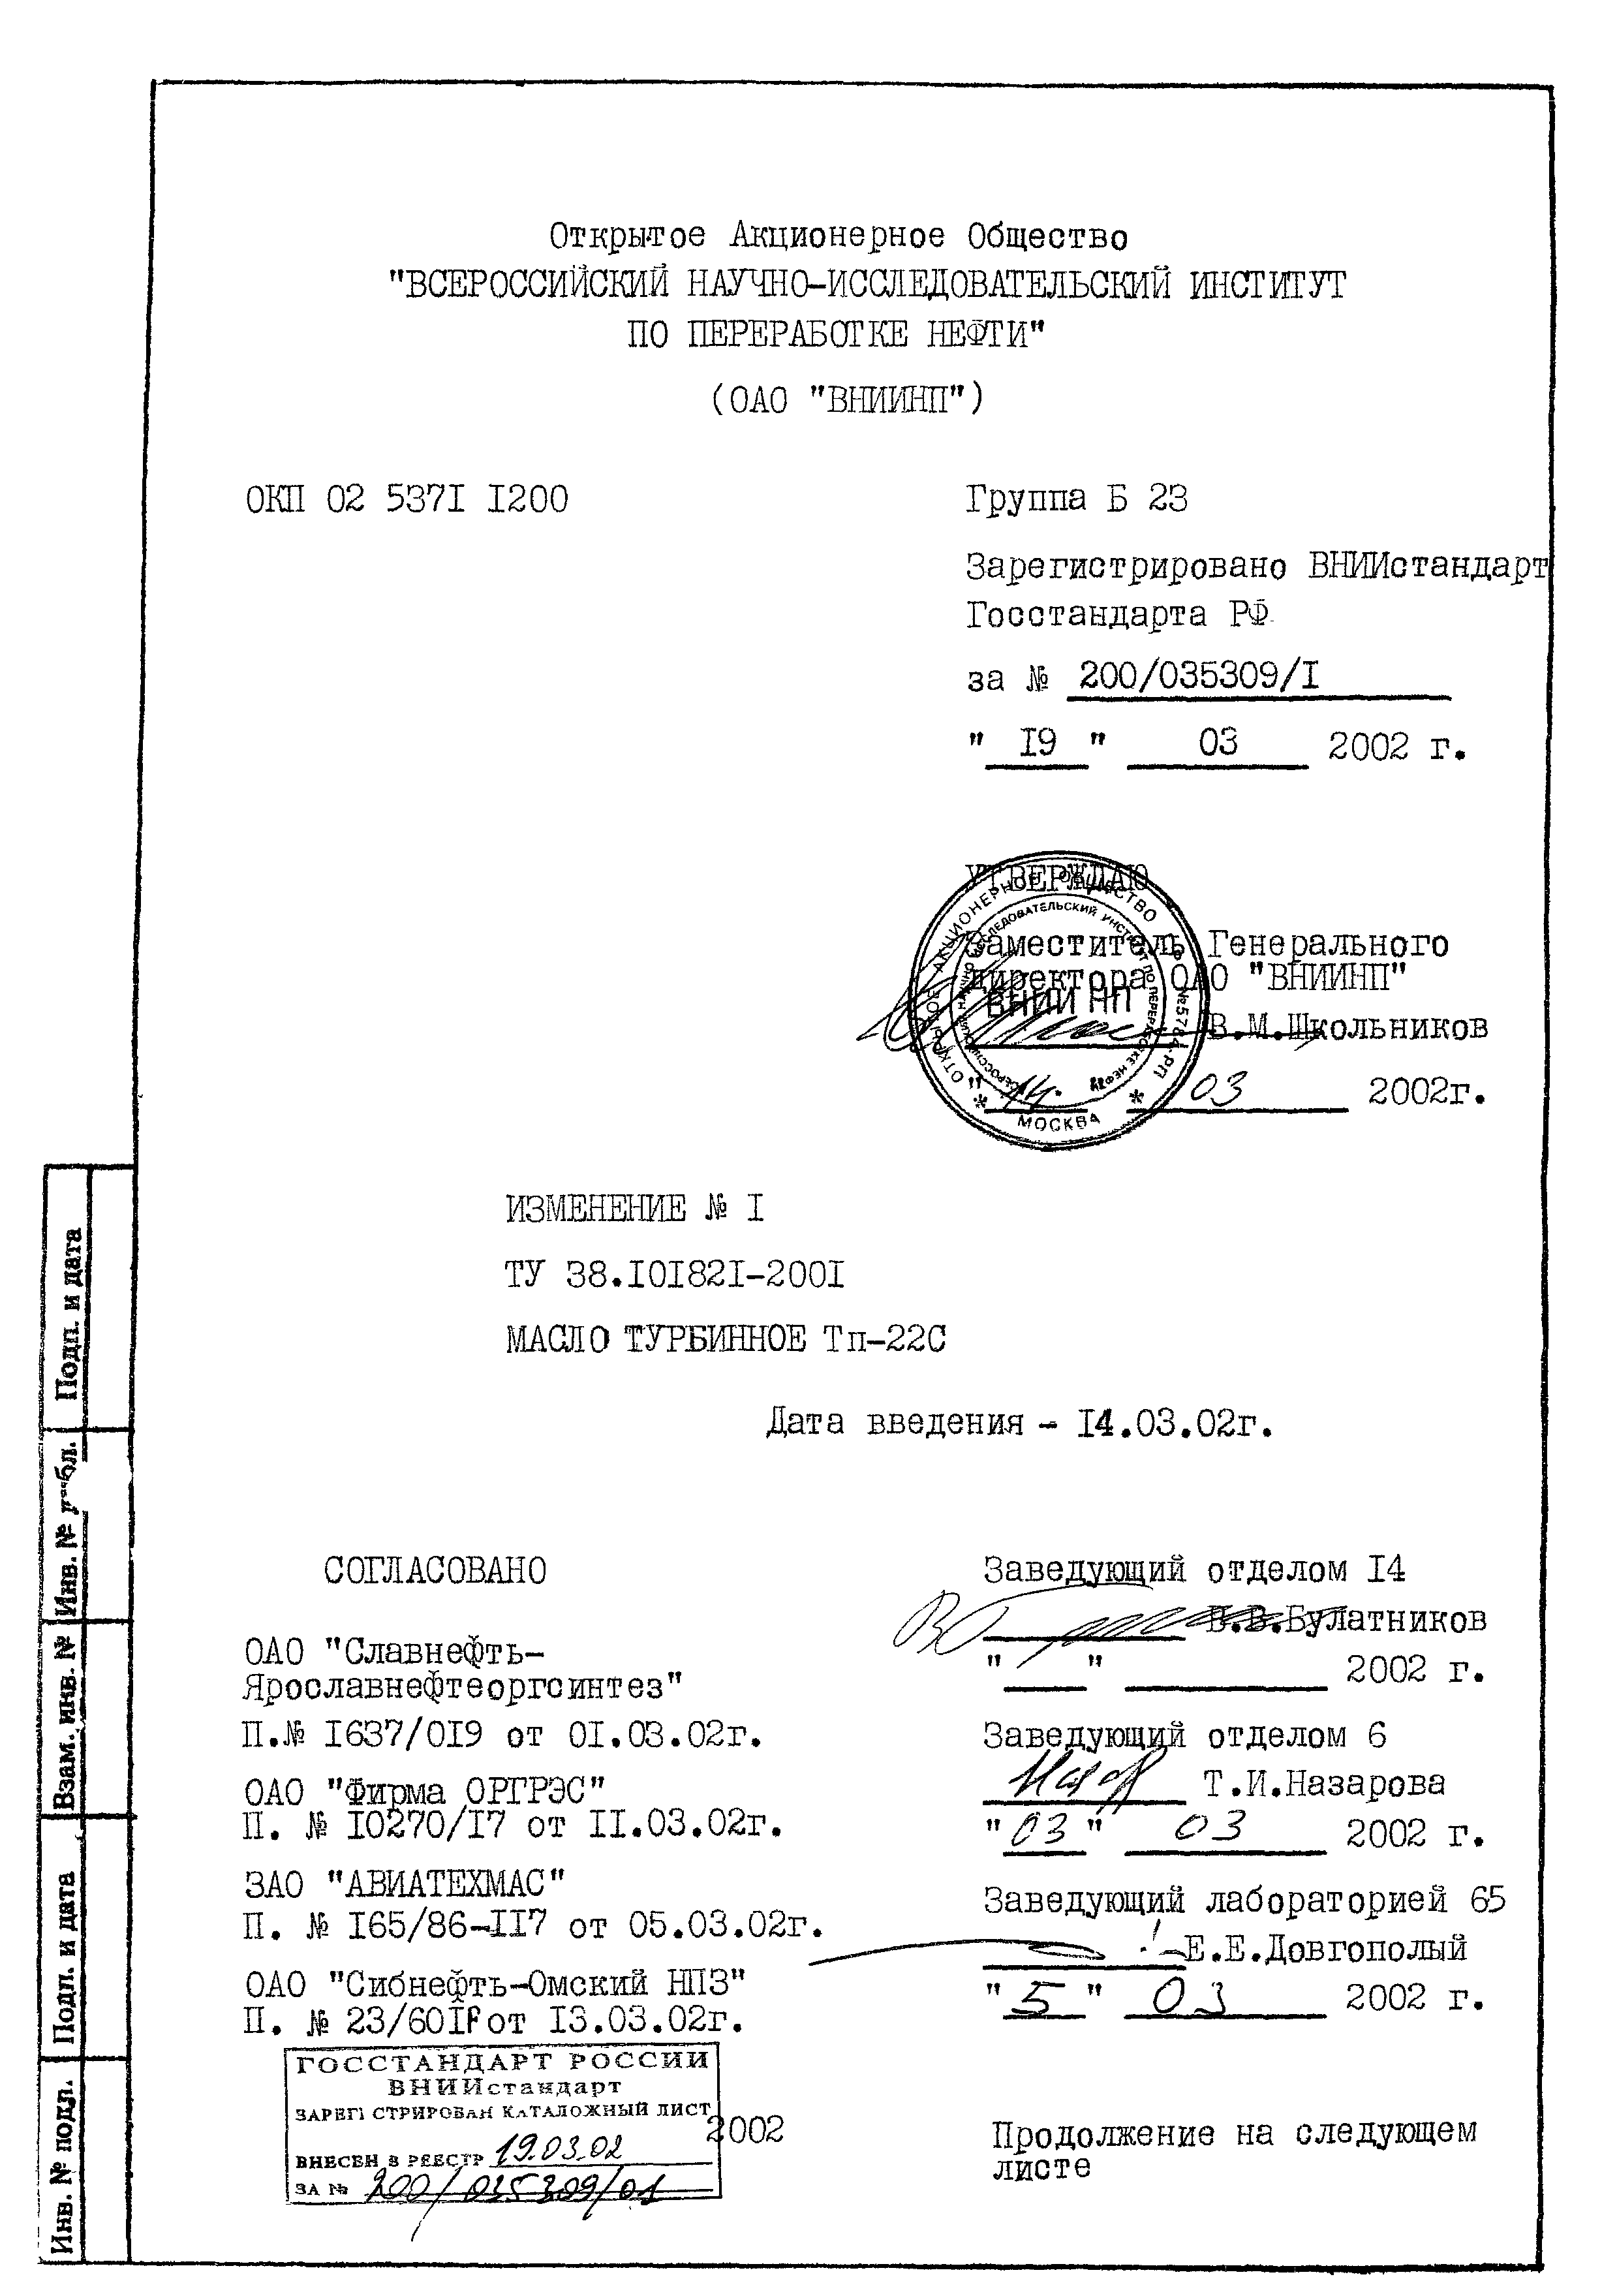 ТУ 38.101821-2001